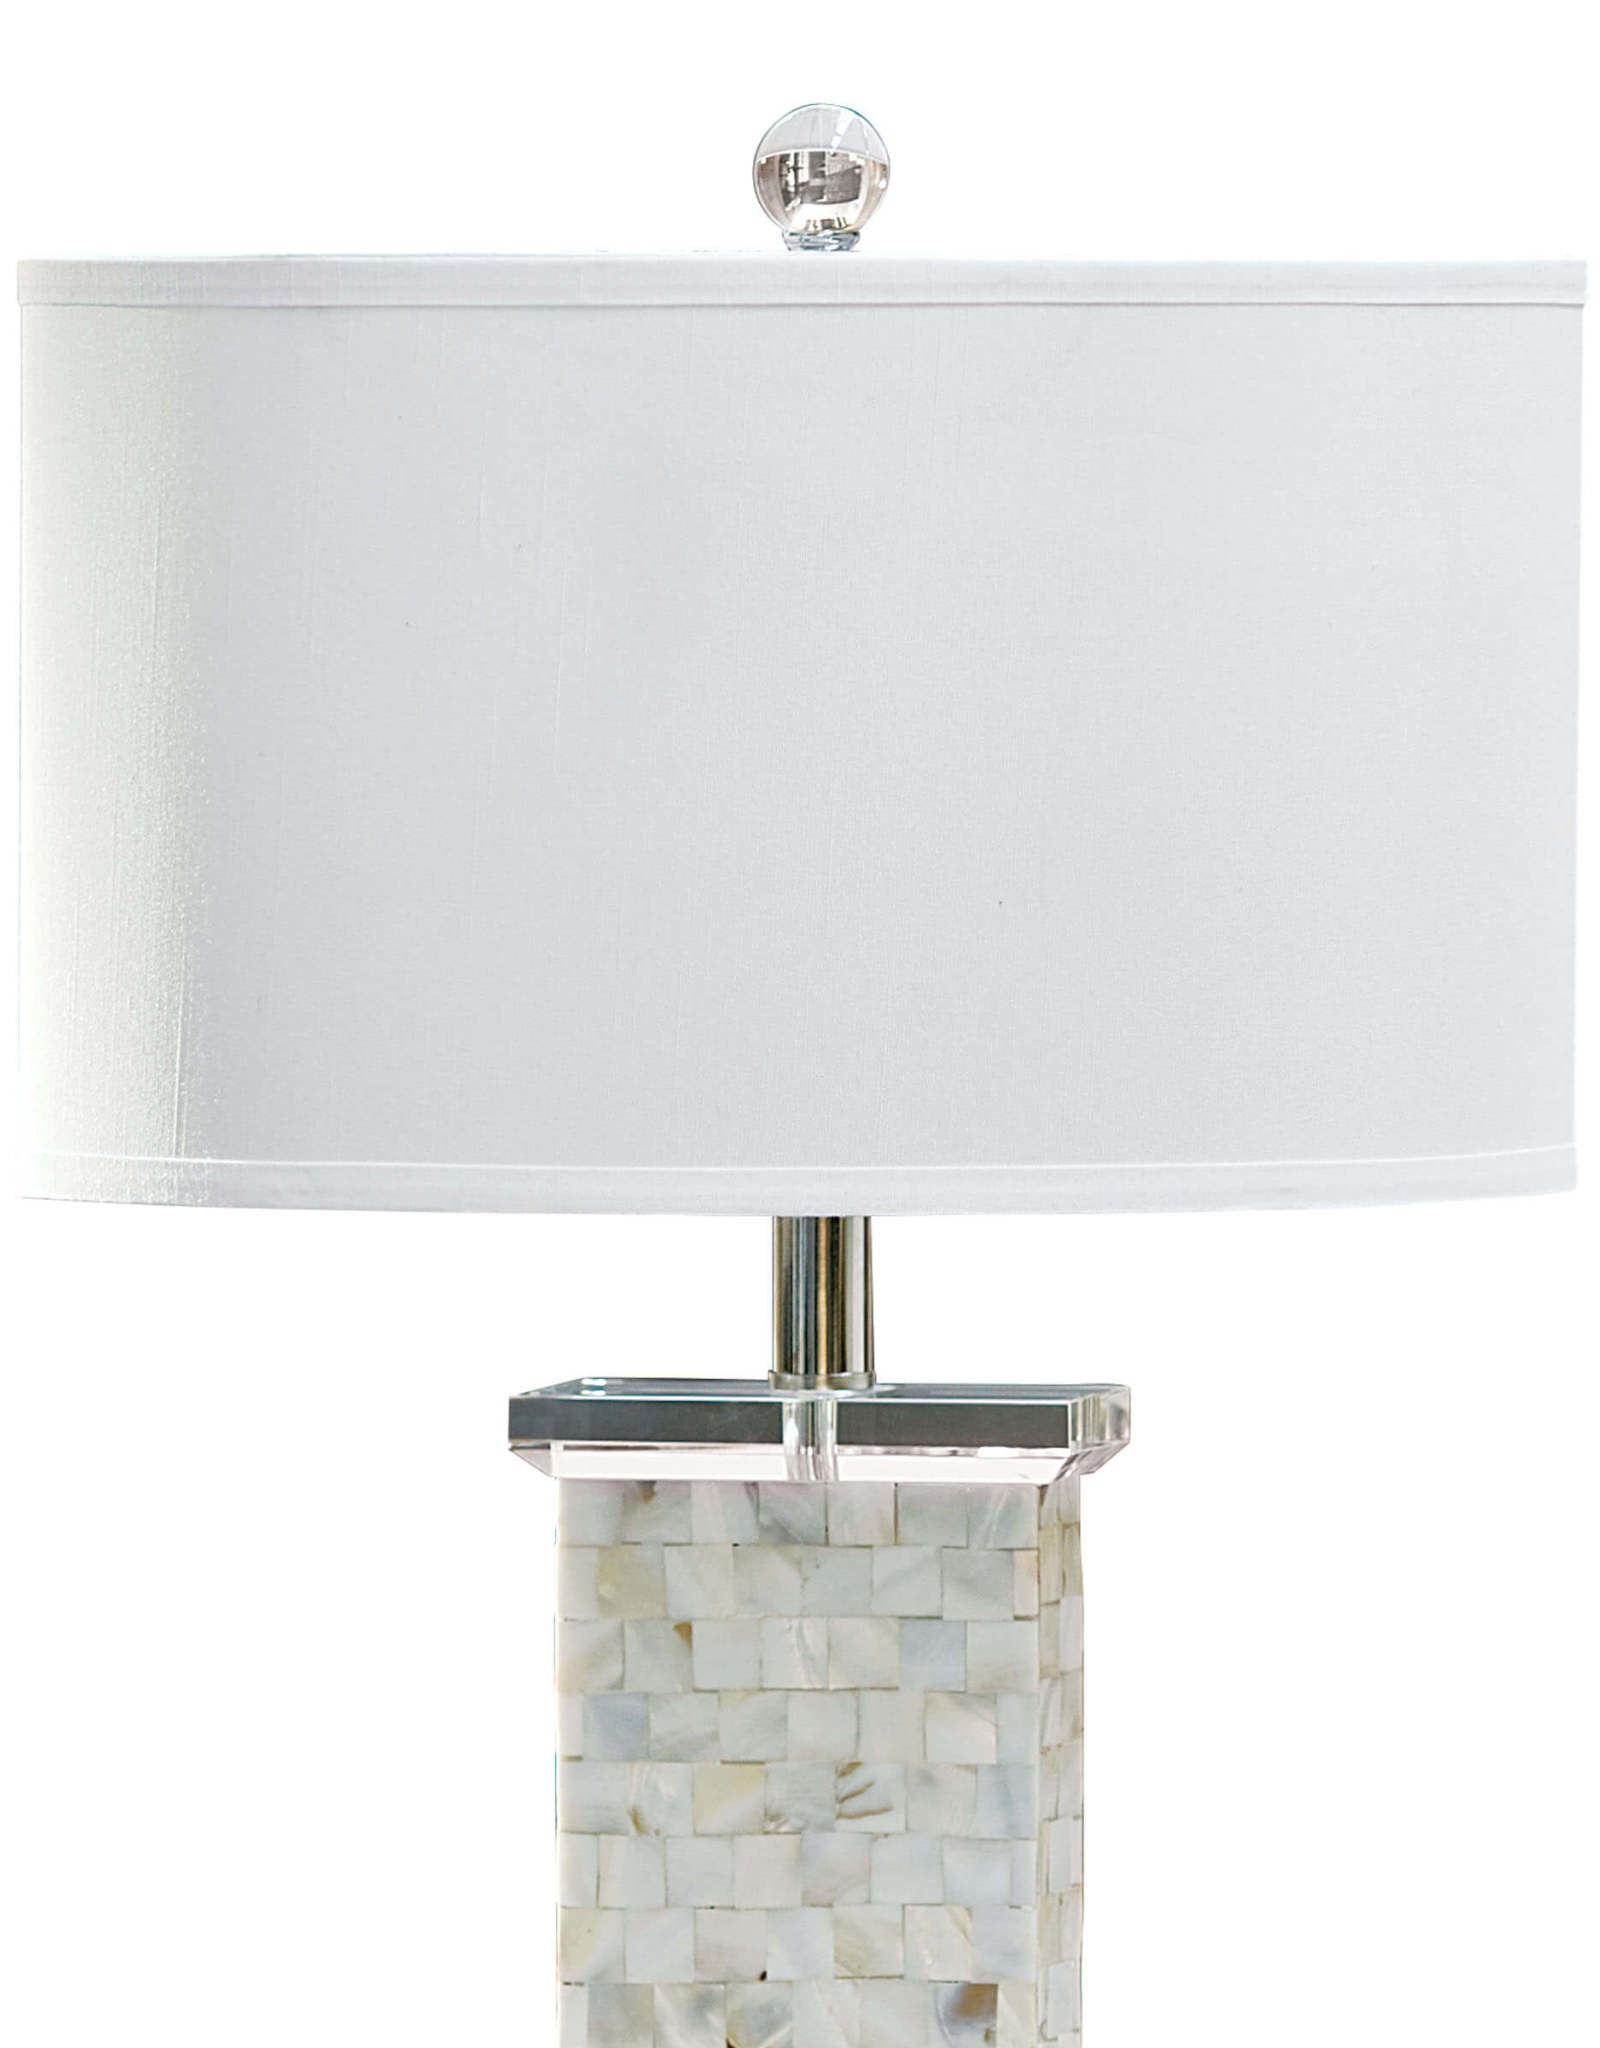 Regina Andrew Design Brook Mother of Pearl Table Lamp